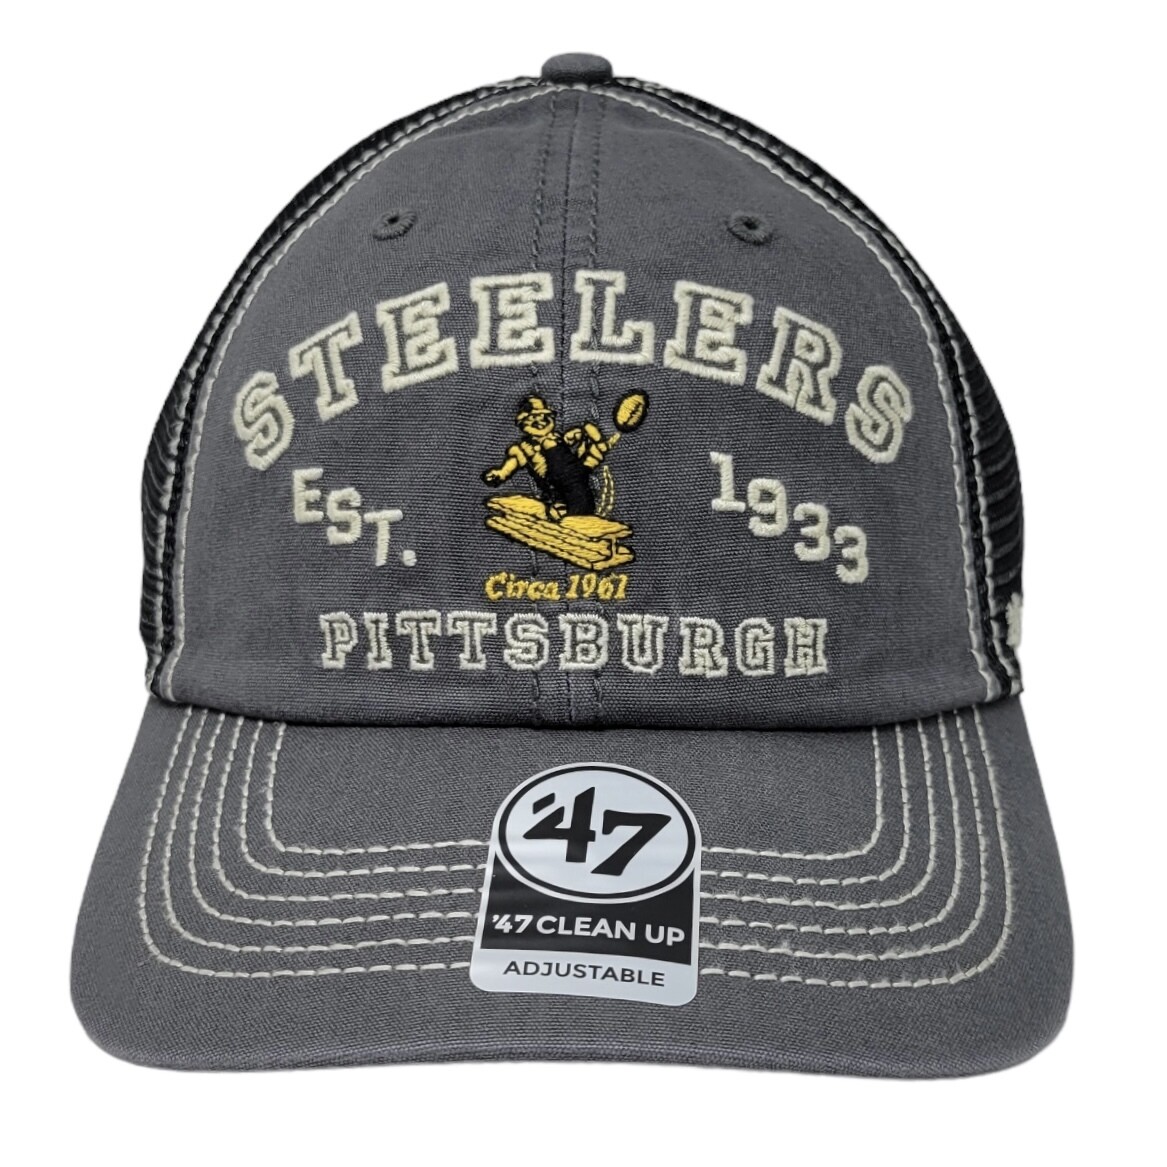 steelers 1933 hat